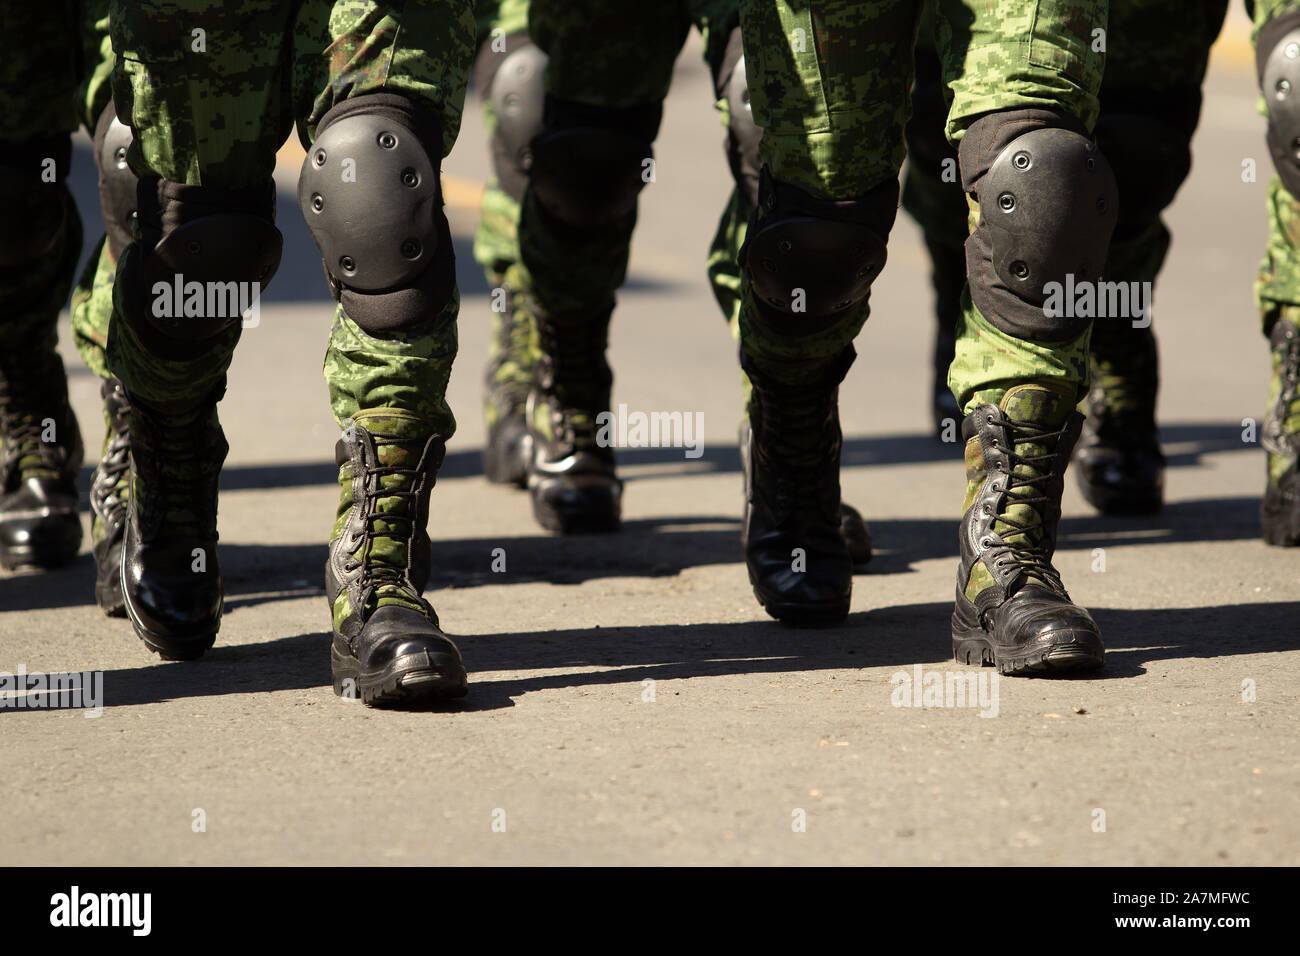 Mexican army uniform e imágenes de alta resolución - Alamy